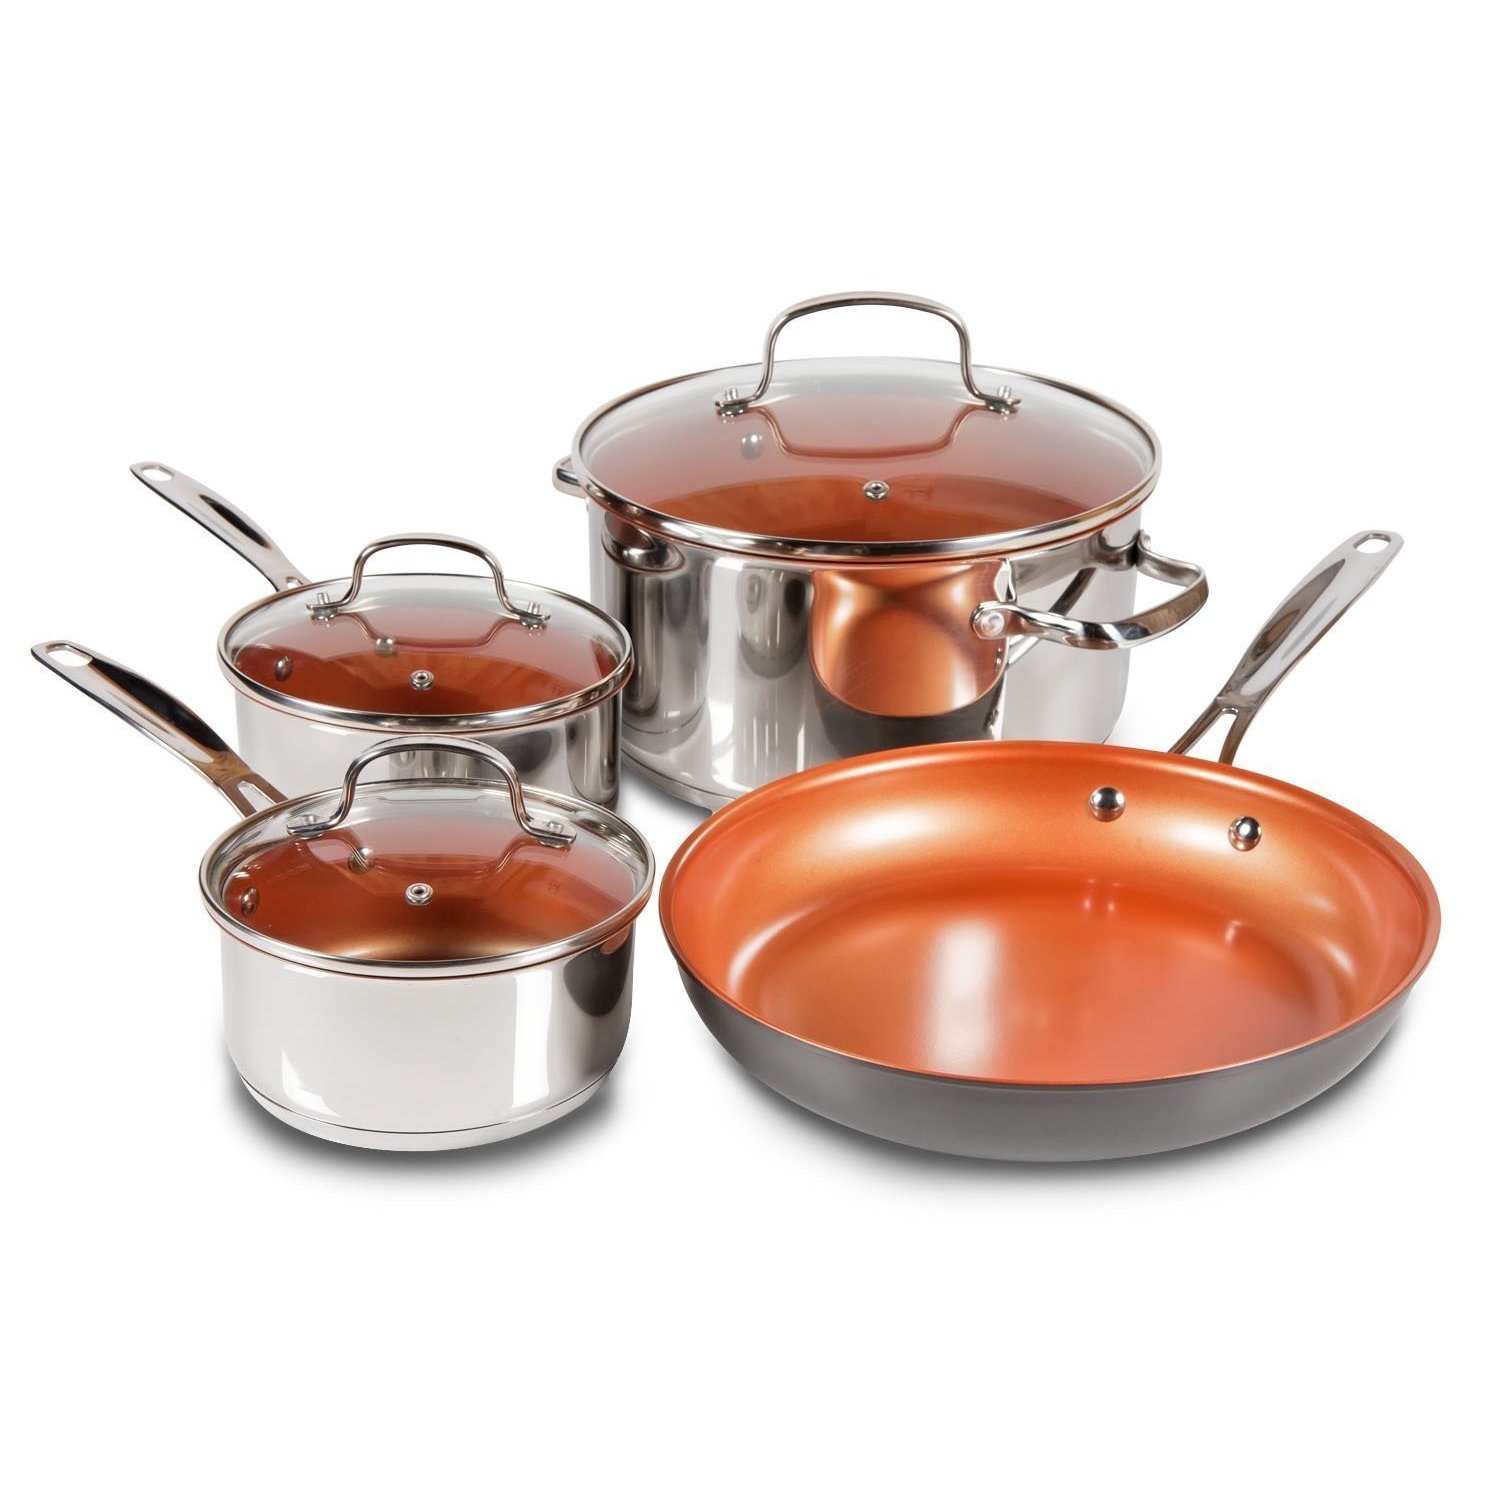 https://ak1.ostkcdn.com/images/products/16258590/Nuwave-Duralon-Ceramic-Non-Stick-7-Piece-Cookware-Set-w-BBQ-Grill-Pan-a73e2fc6-2818-4163-8f8e-c7ce929af9cd.jpg